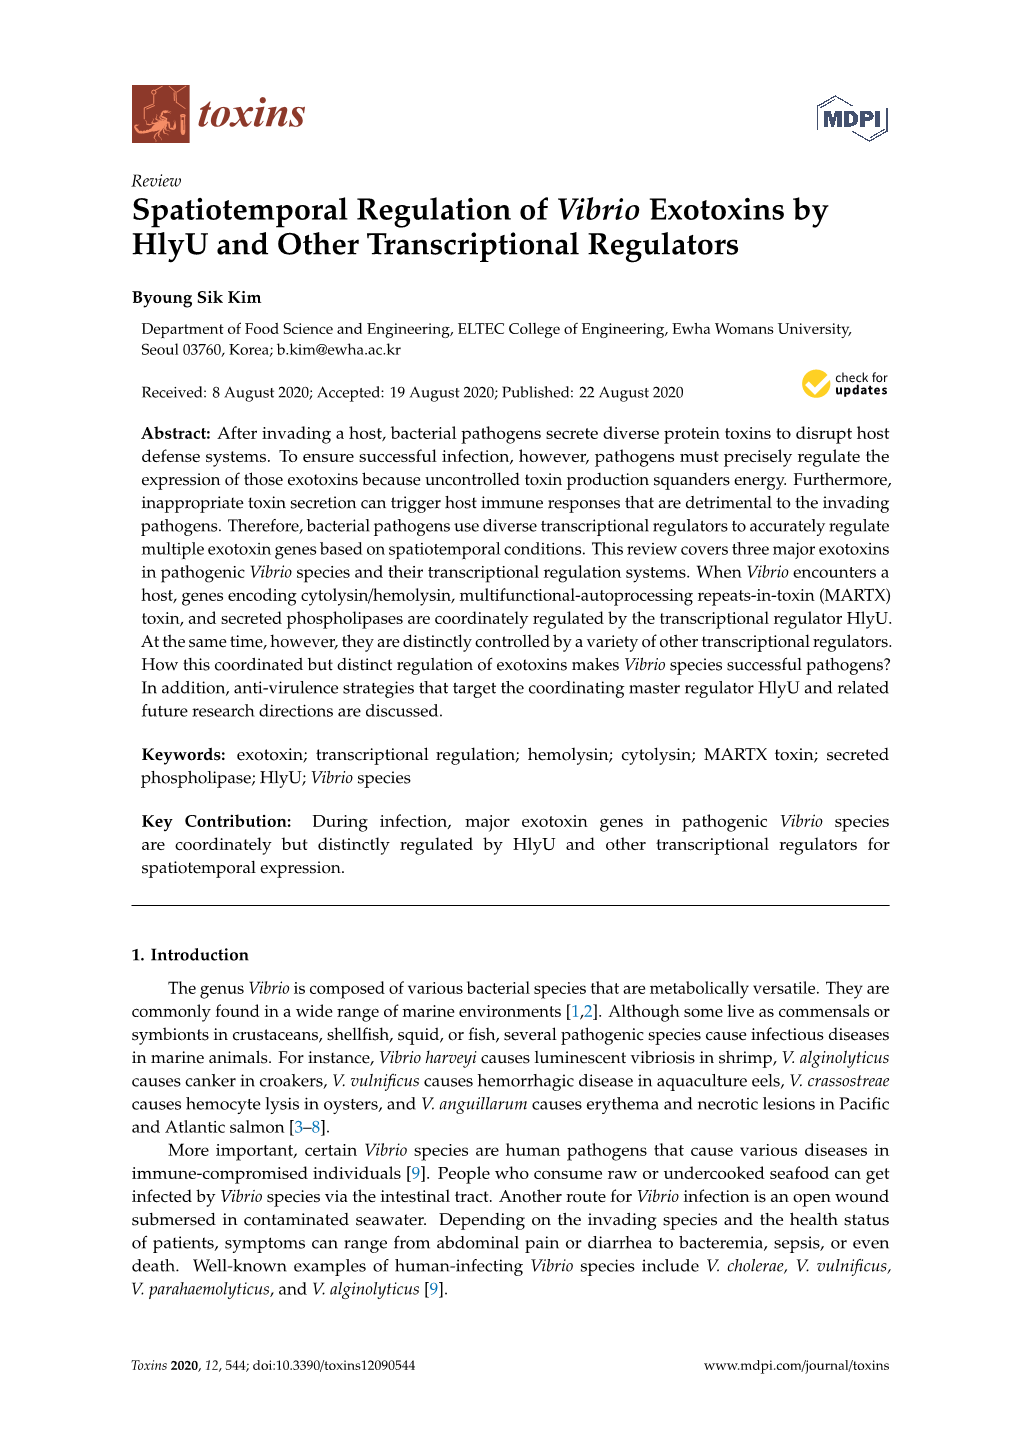 Spatiotemporal Regulation of Vibrio Exotoxins by Hlyu and Other Transcriptional Regulators